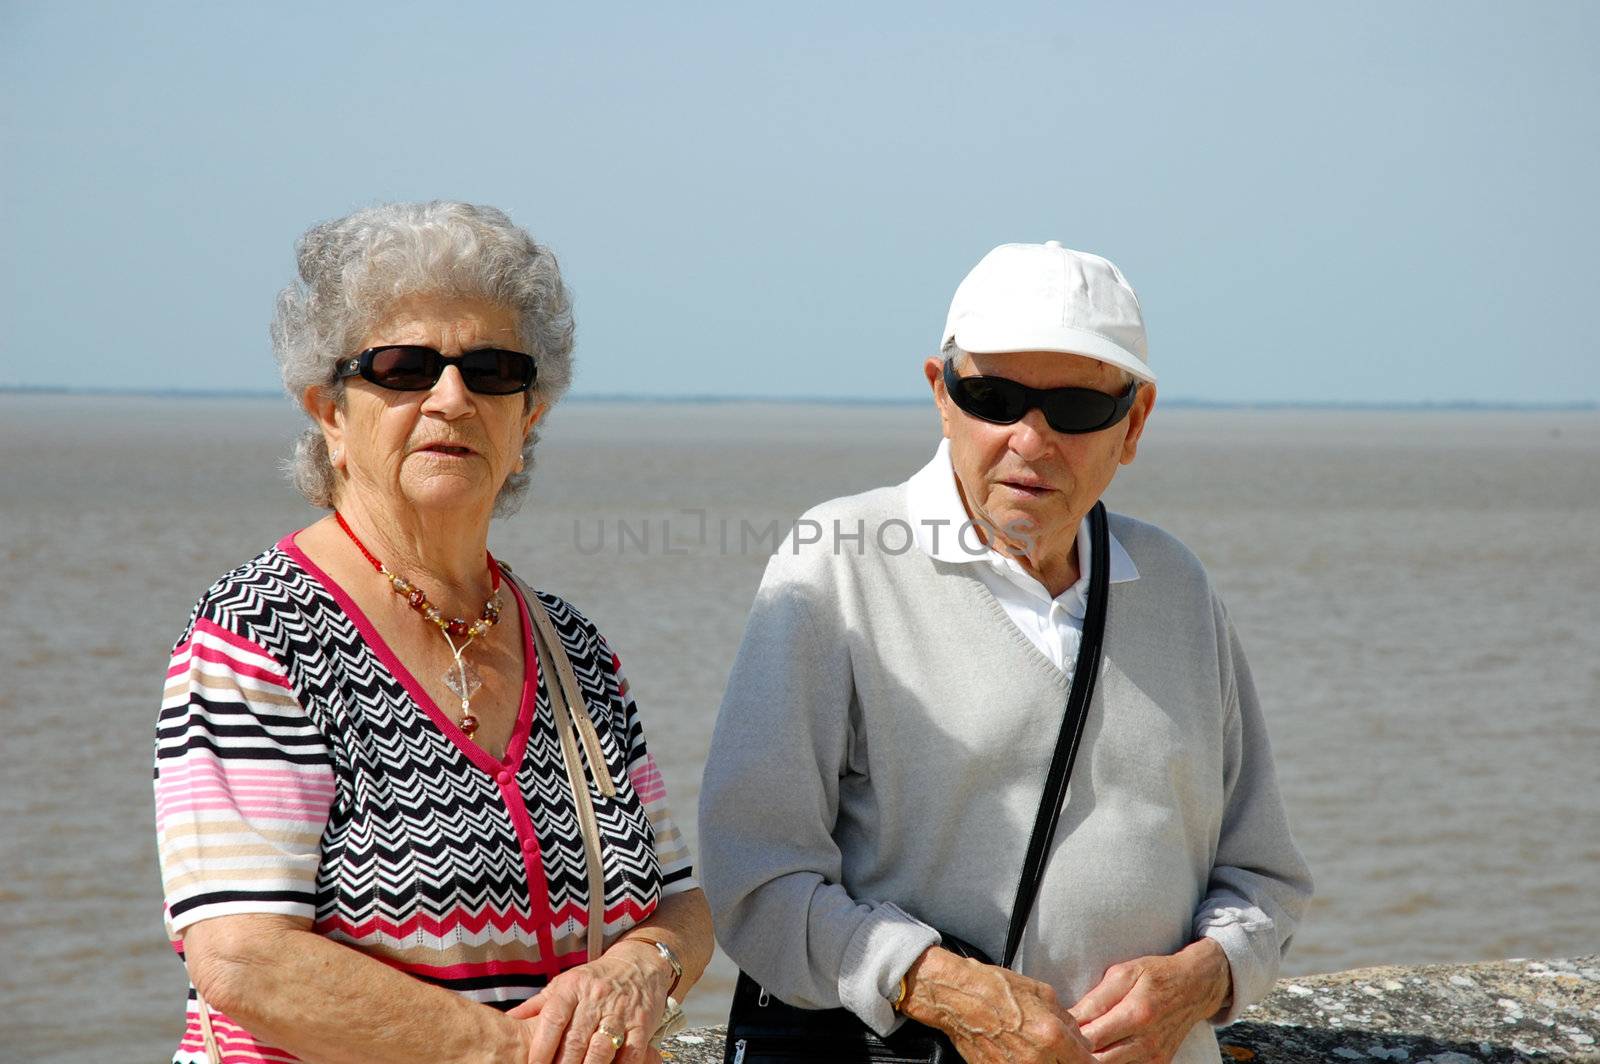 Happy senior couple walking along the coast of Brittany